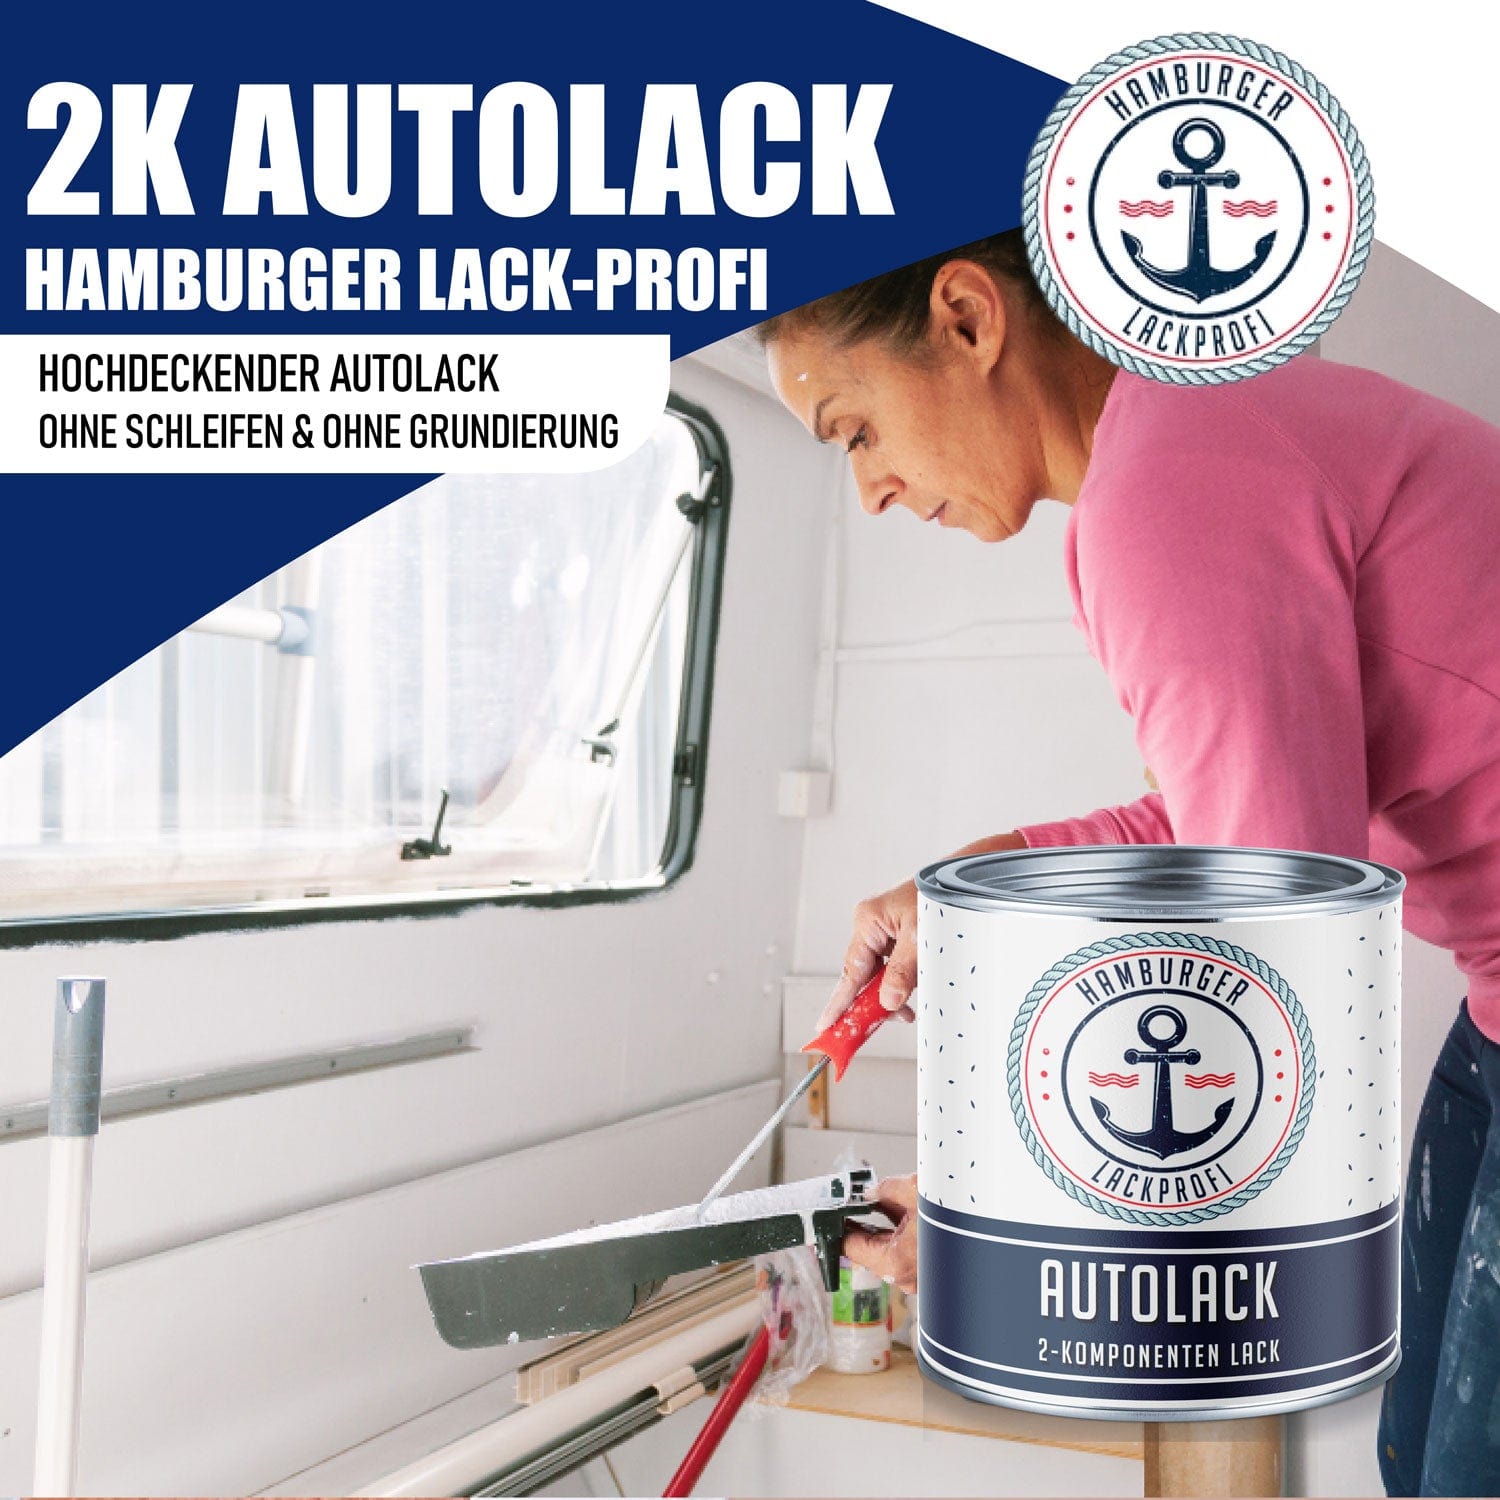 Hamburger Lack-Profi Lacke & Beschichtungen Hamburger Lack-Profi 2K Autolack in Schiefergrau RAL 7015 mit Lackierset (X300) & Verdünnung (1 L) - 30% Sparangebot